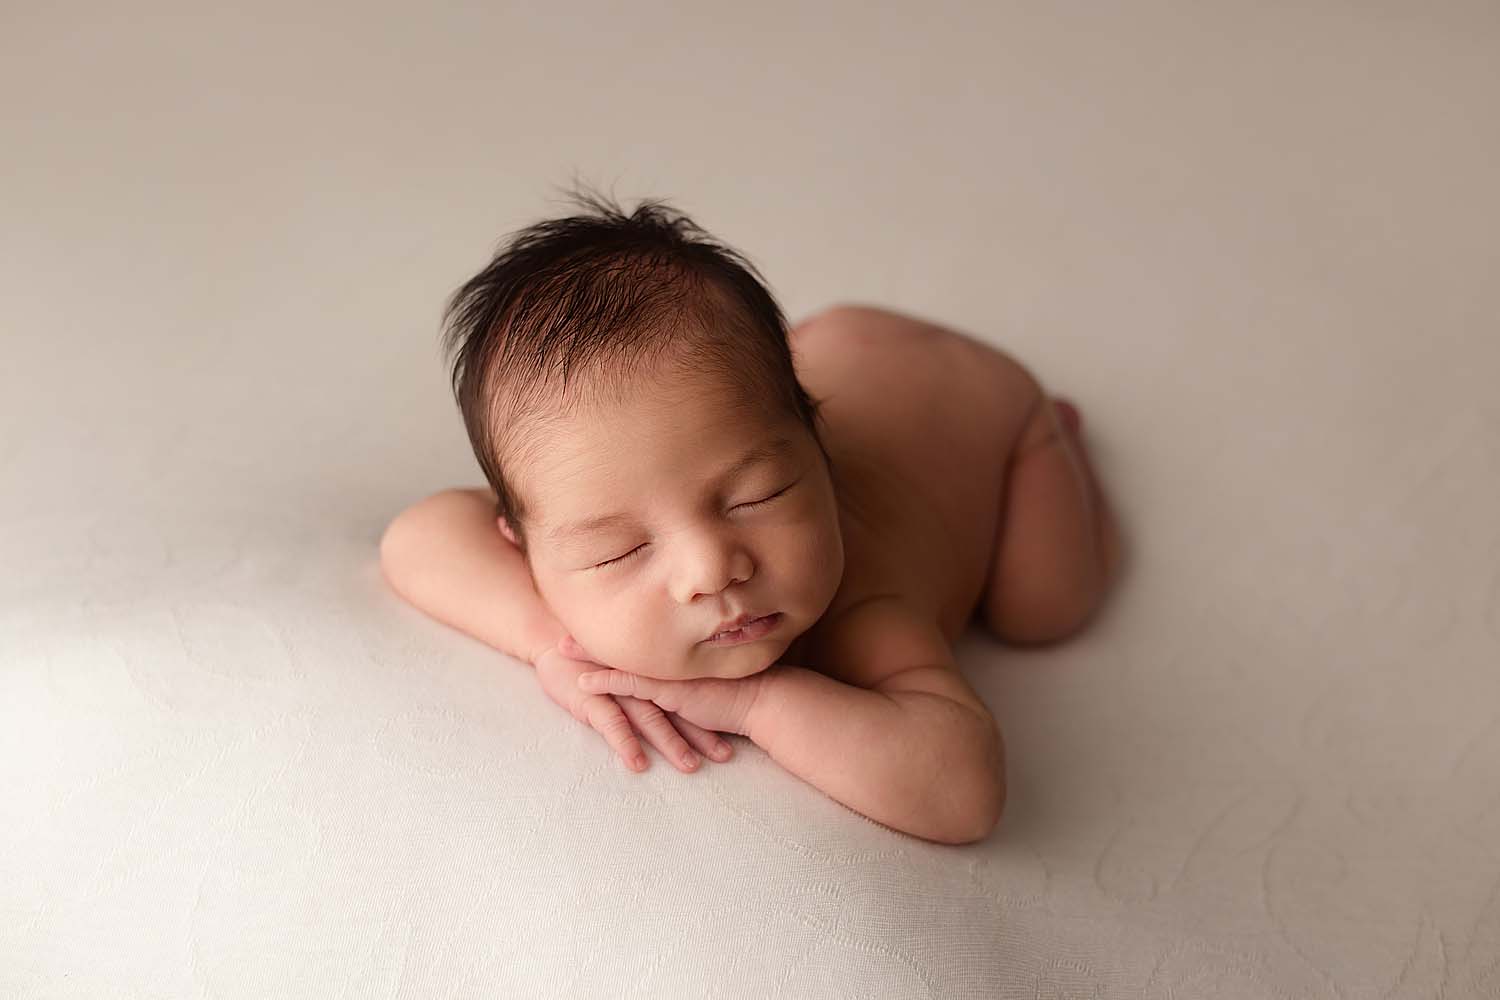 baby sleeping for newborn photography in weston, fl near ft. lauderdale, fl